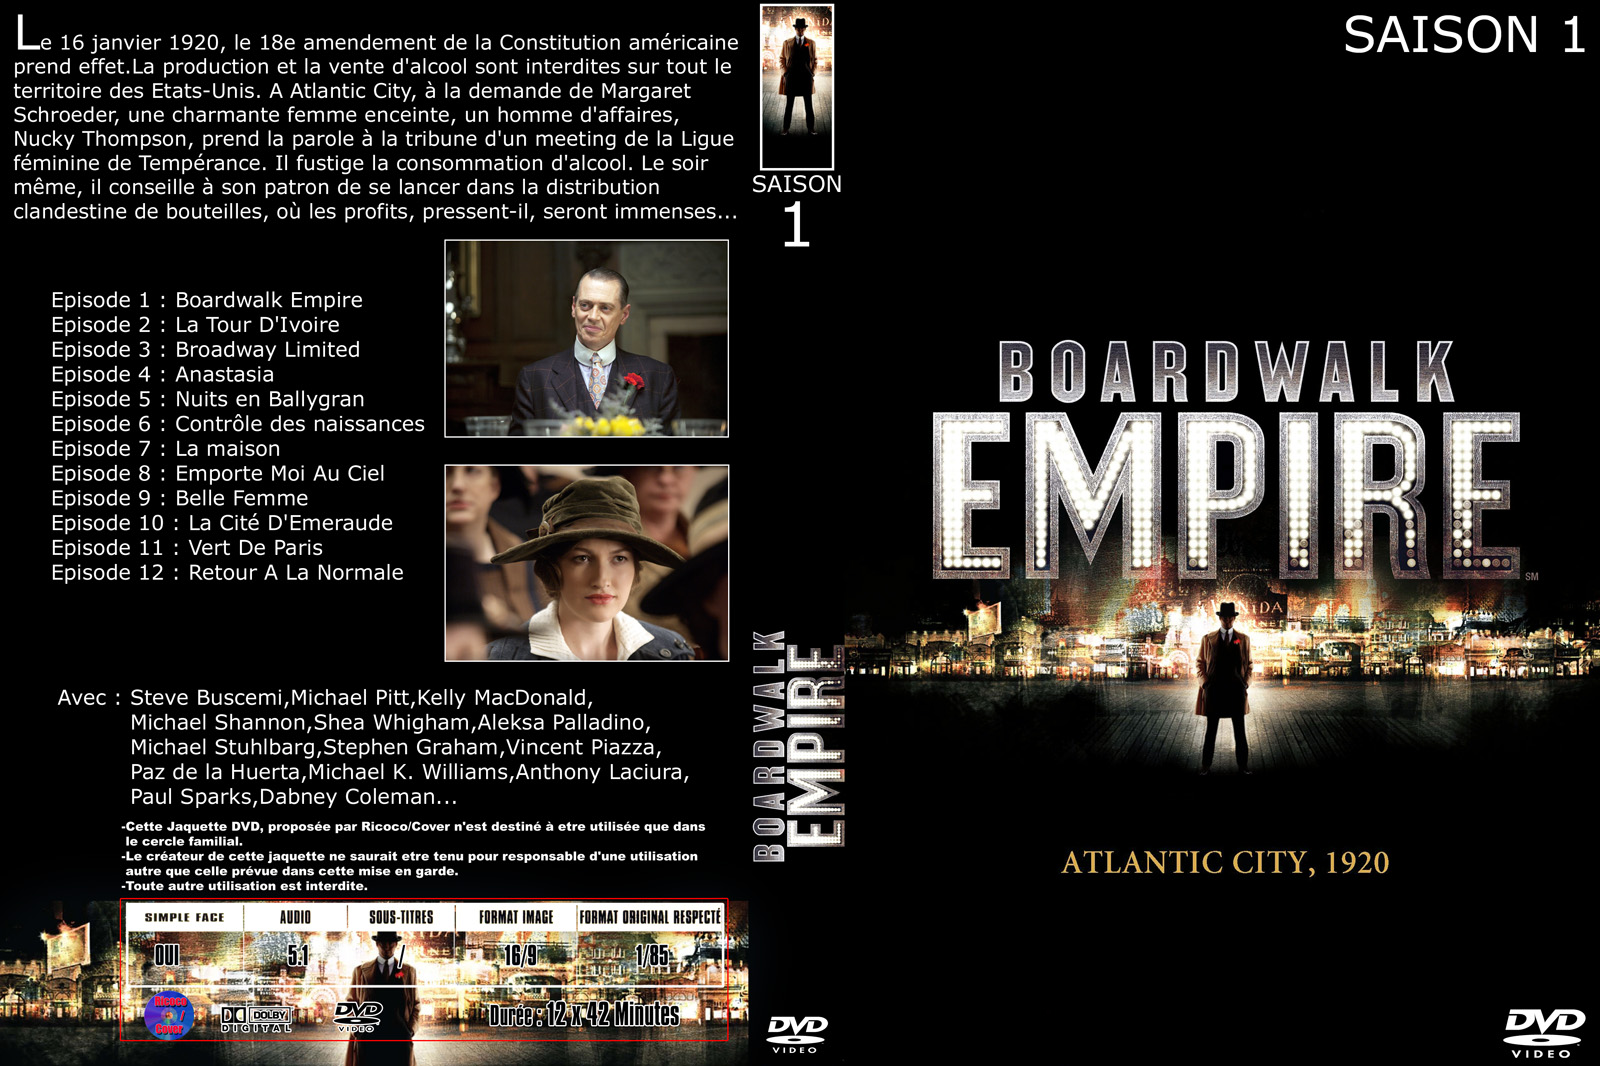 Jaquette DVD Boardwalk Empire Saison 1 custom